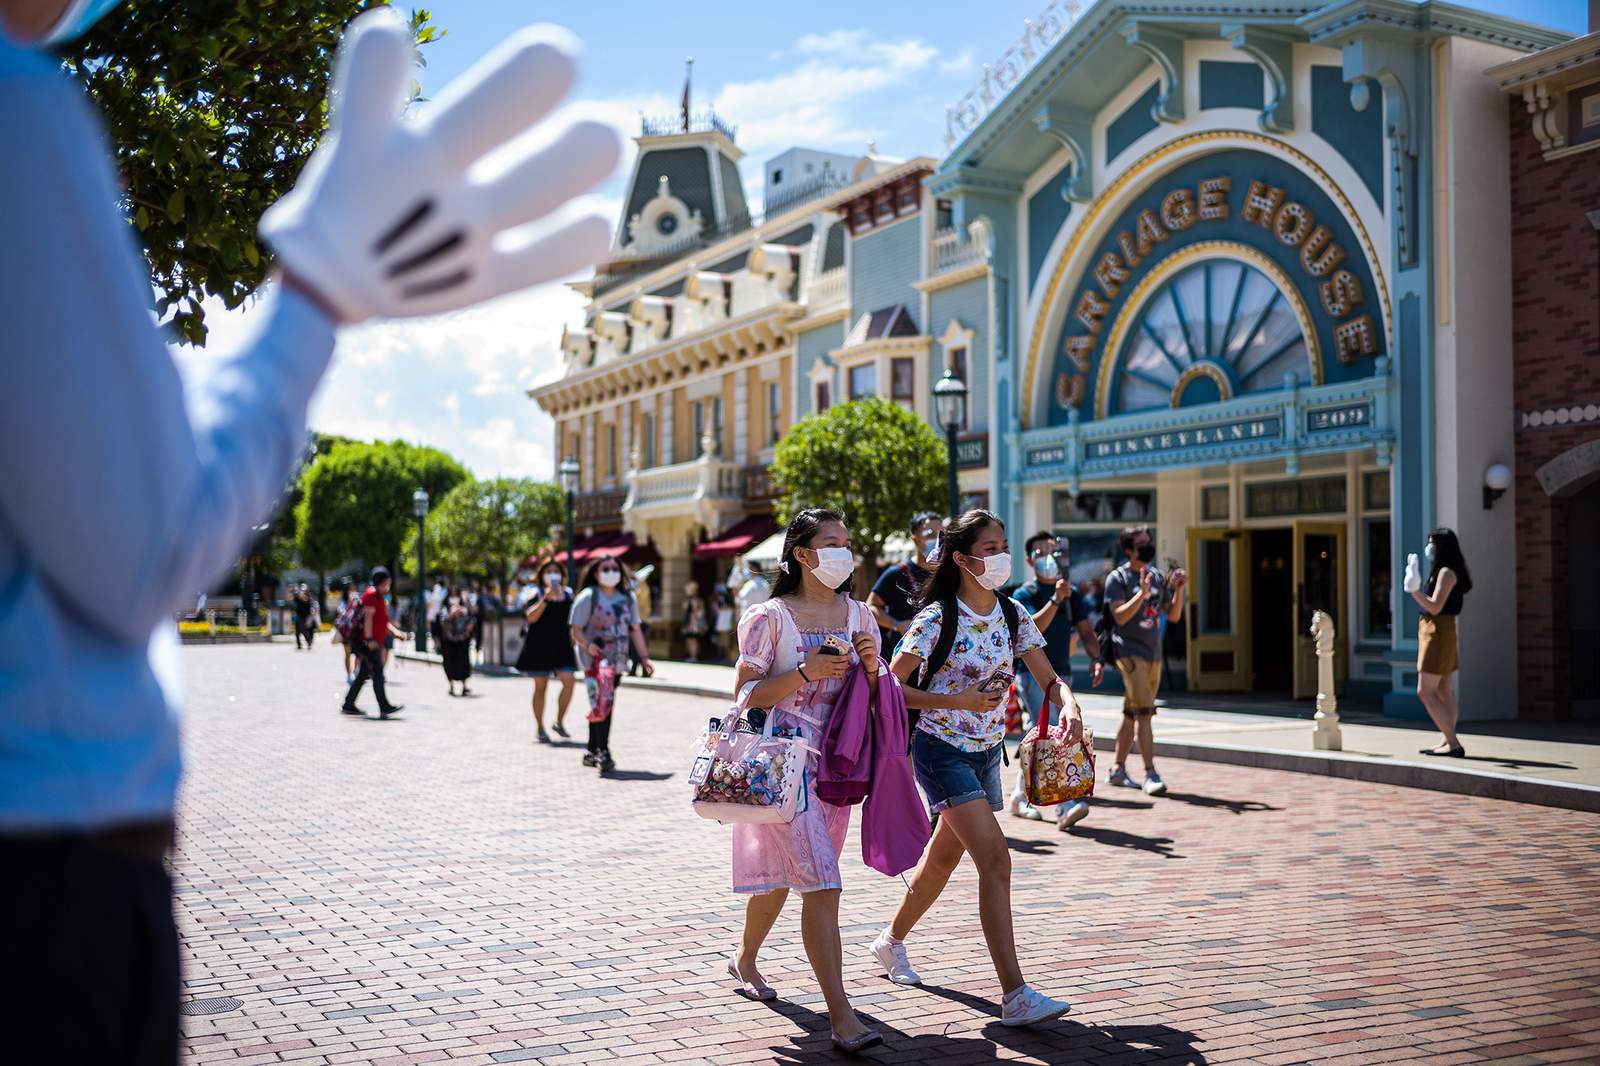 Hong Kong Disneyland will close again after a surge in coronavirus cases